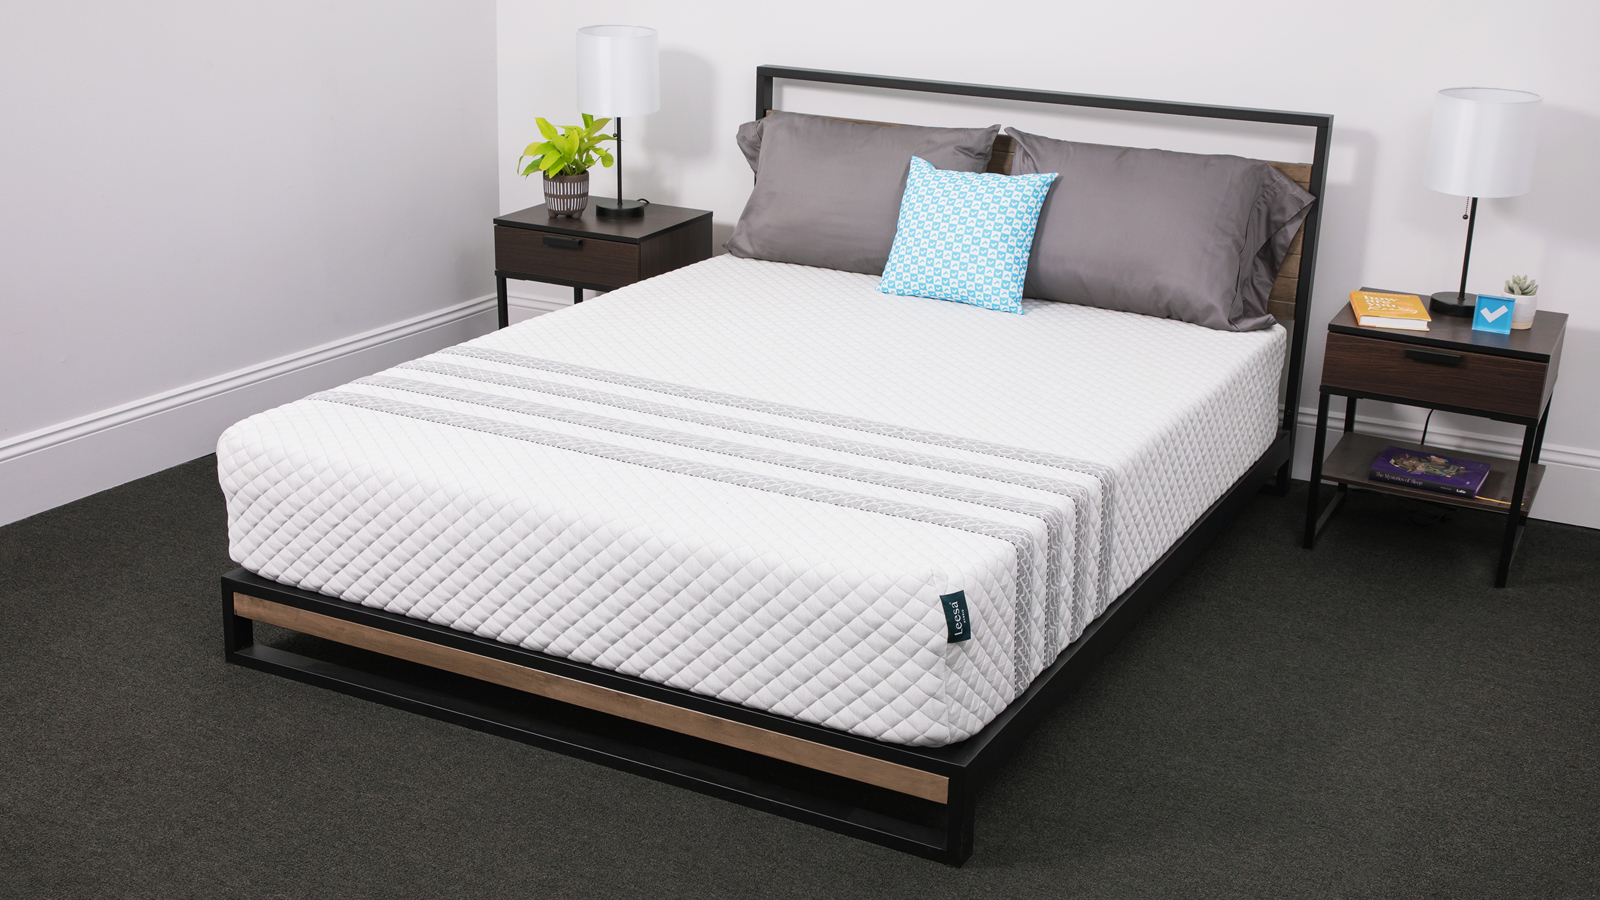 Leesa sapira hybrid mattress review: A Comprehensive Review缩略图